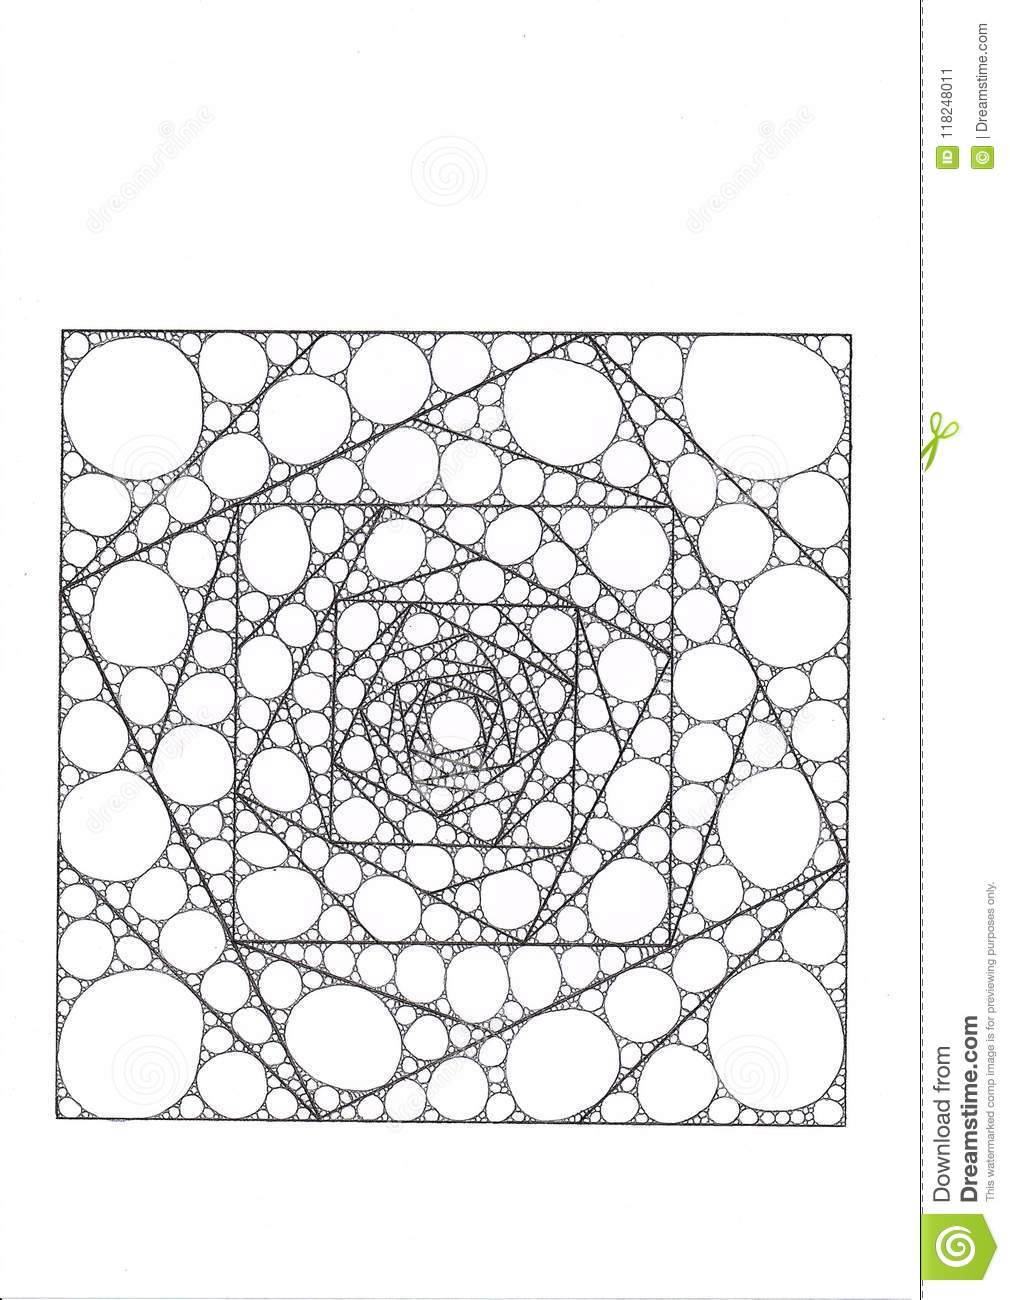 drawing-square-made-smaller-squares-handmade-illustration-depicting-filled-circles-ellipses-11...jpg